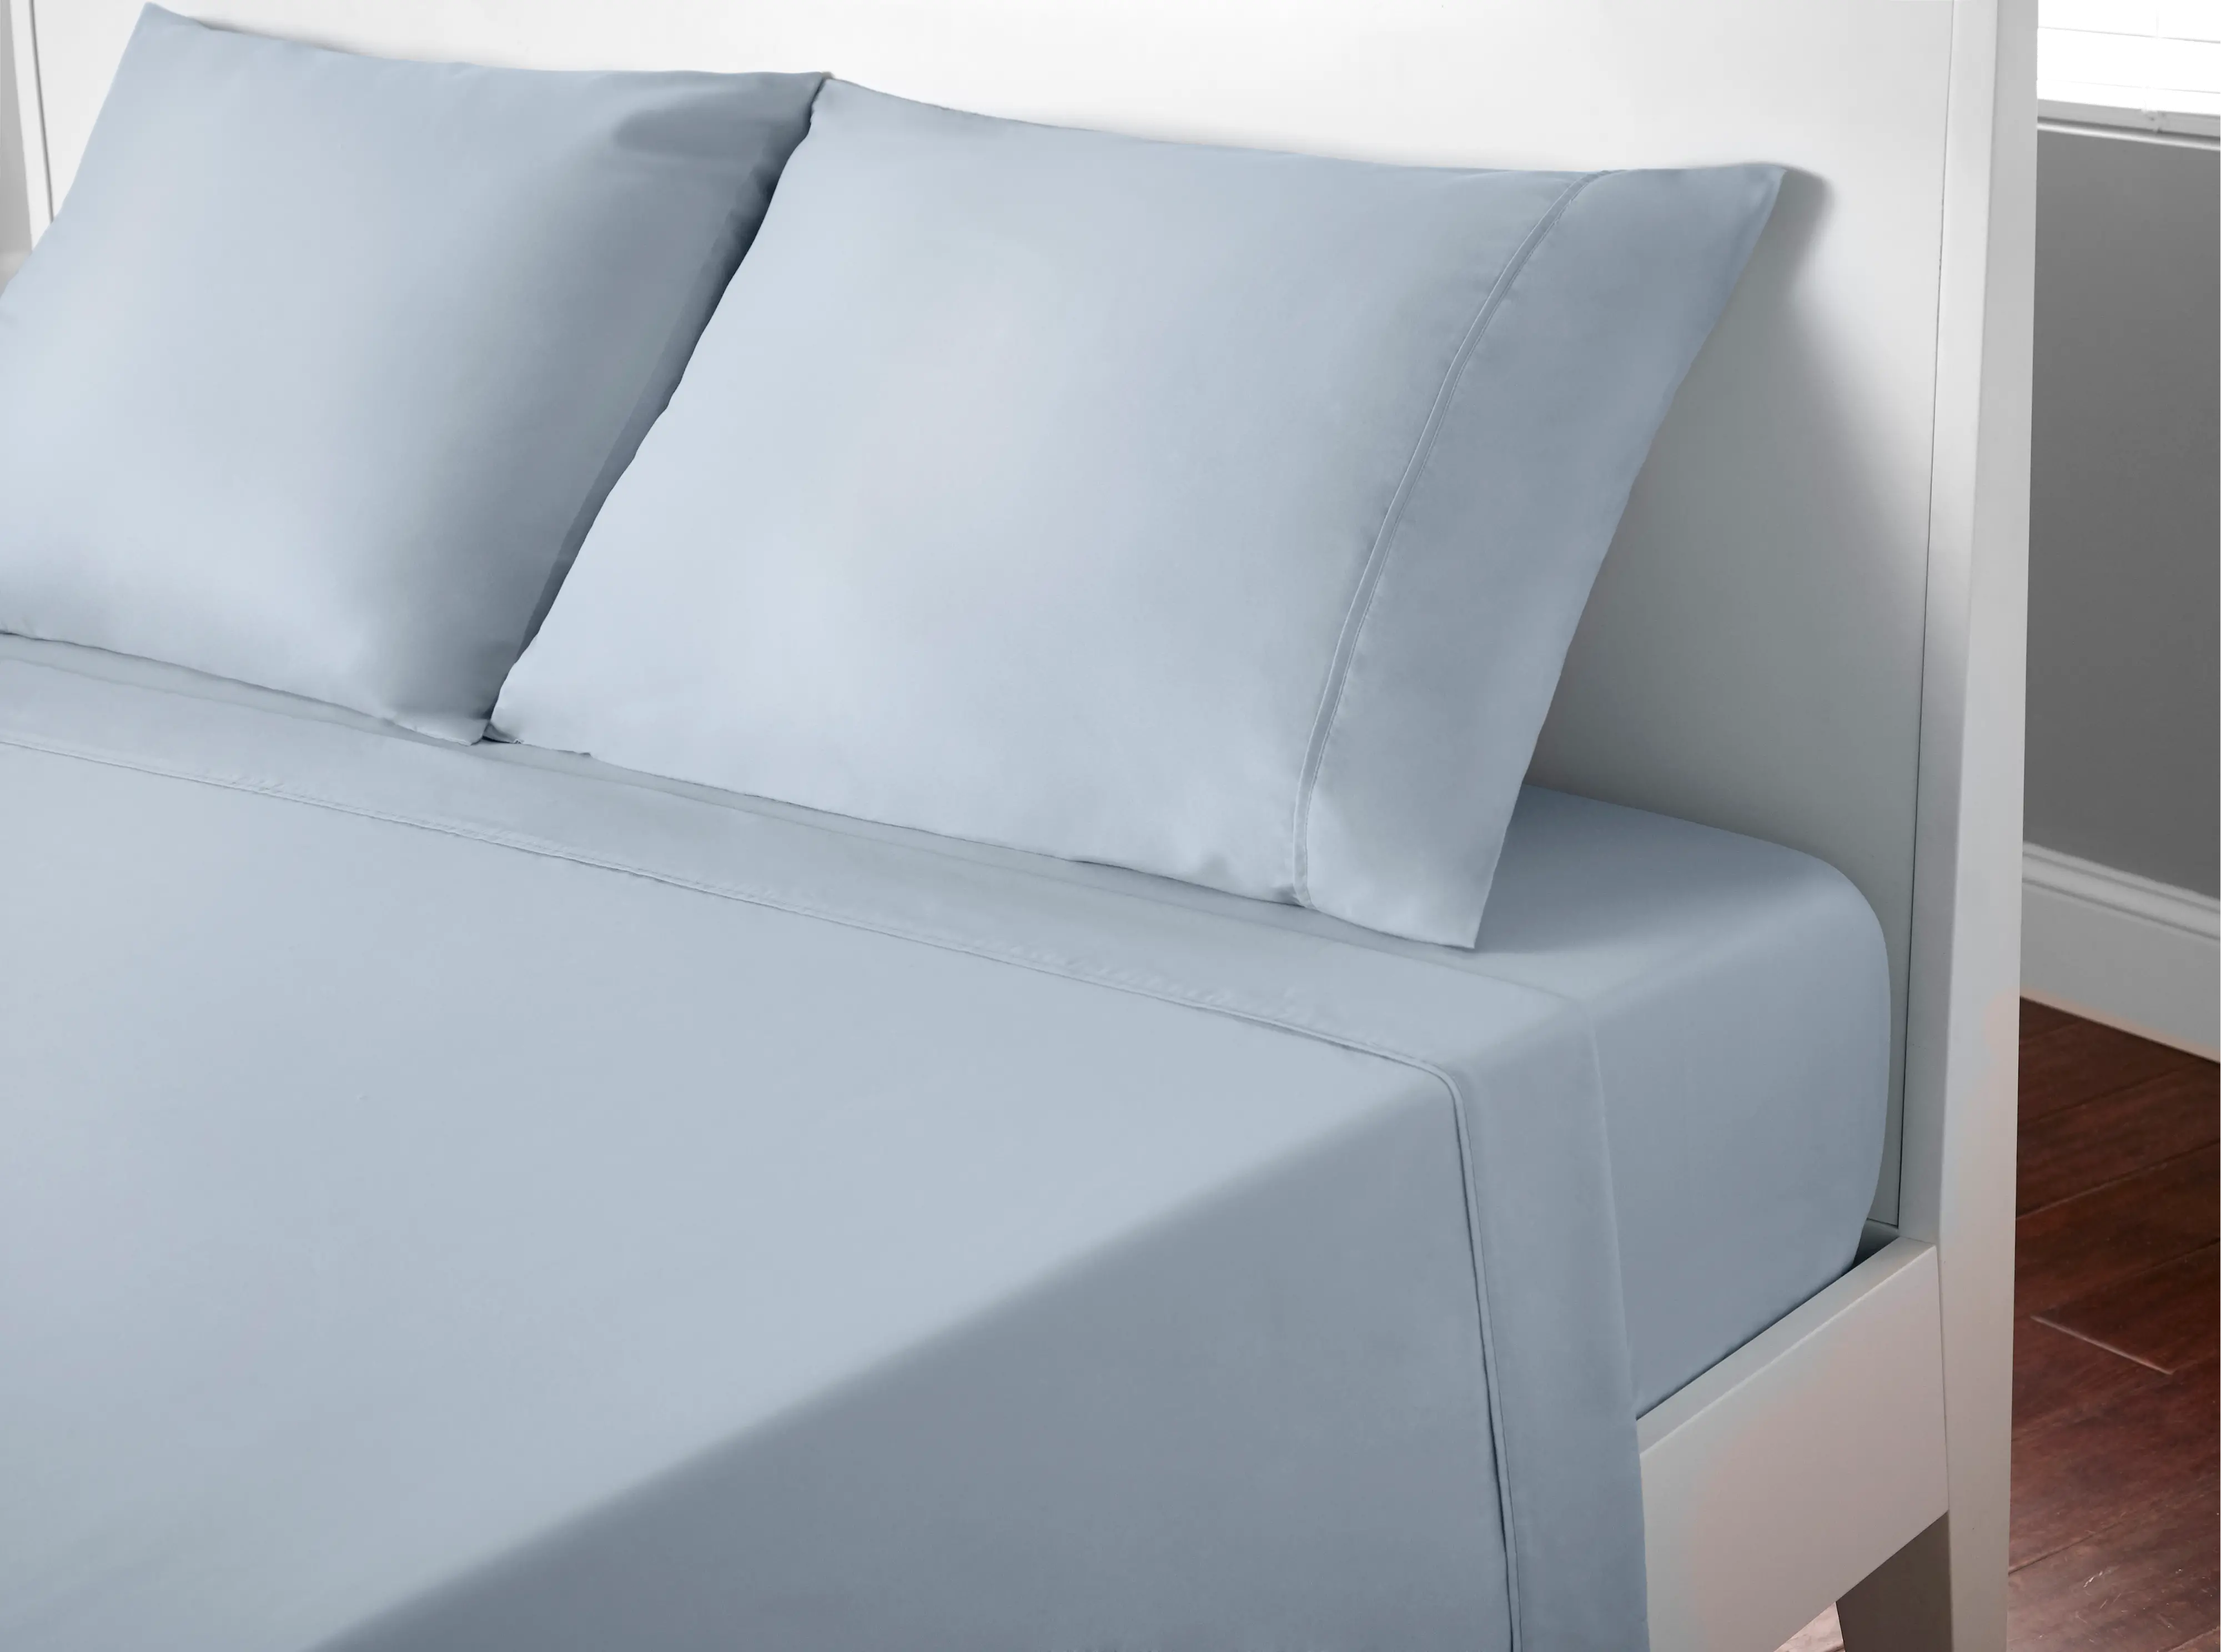 Bedgear Gray Blue Microfiber Twin Bed Sheets